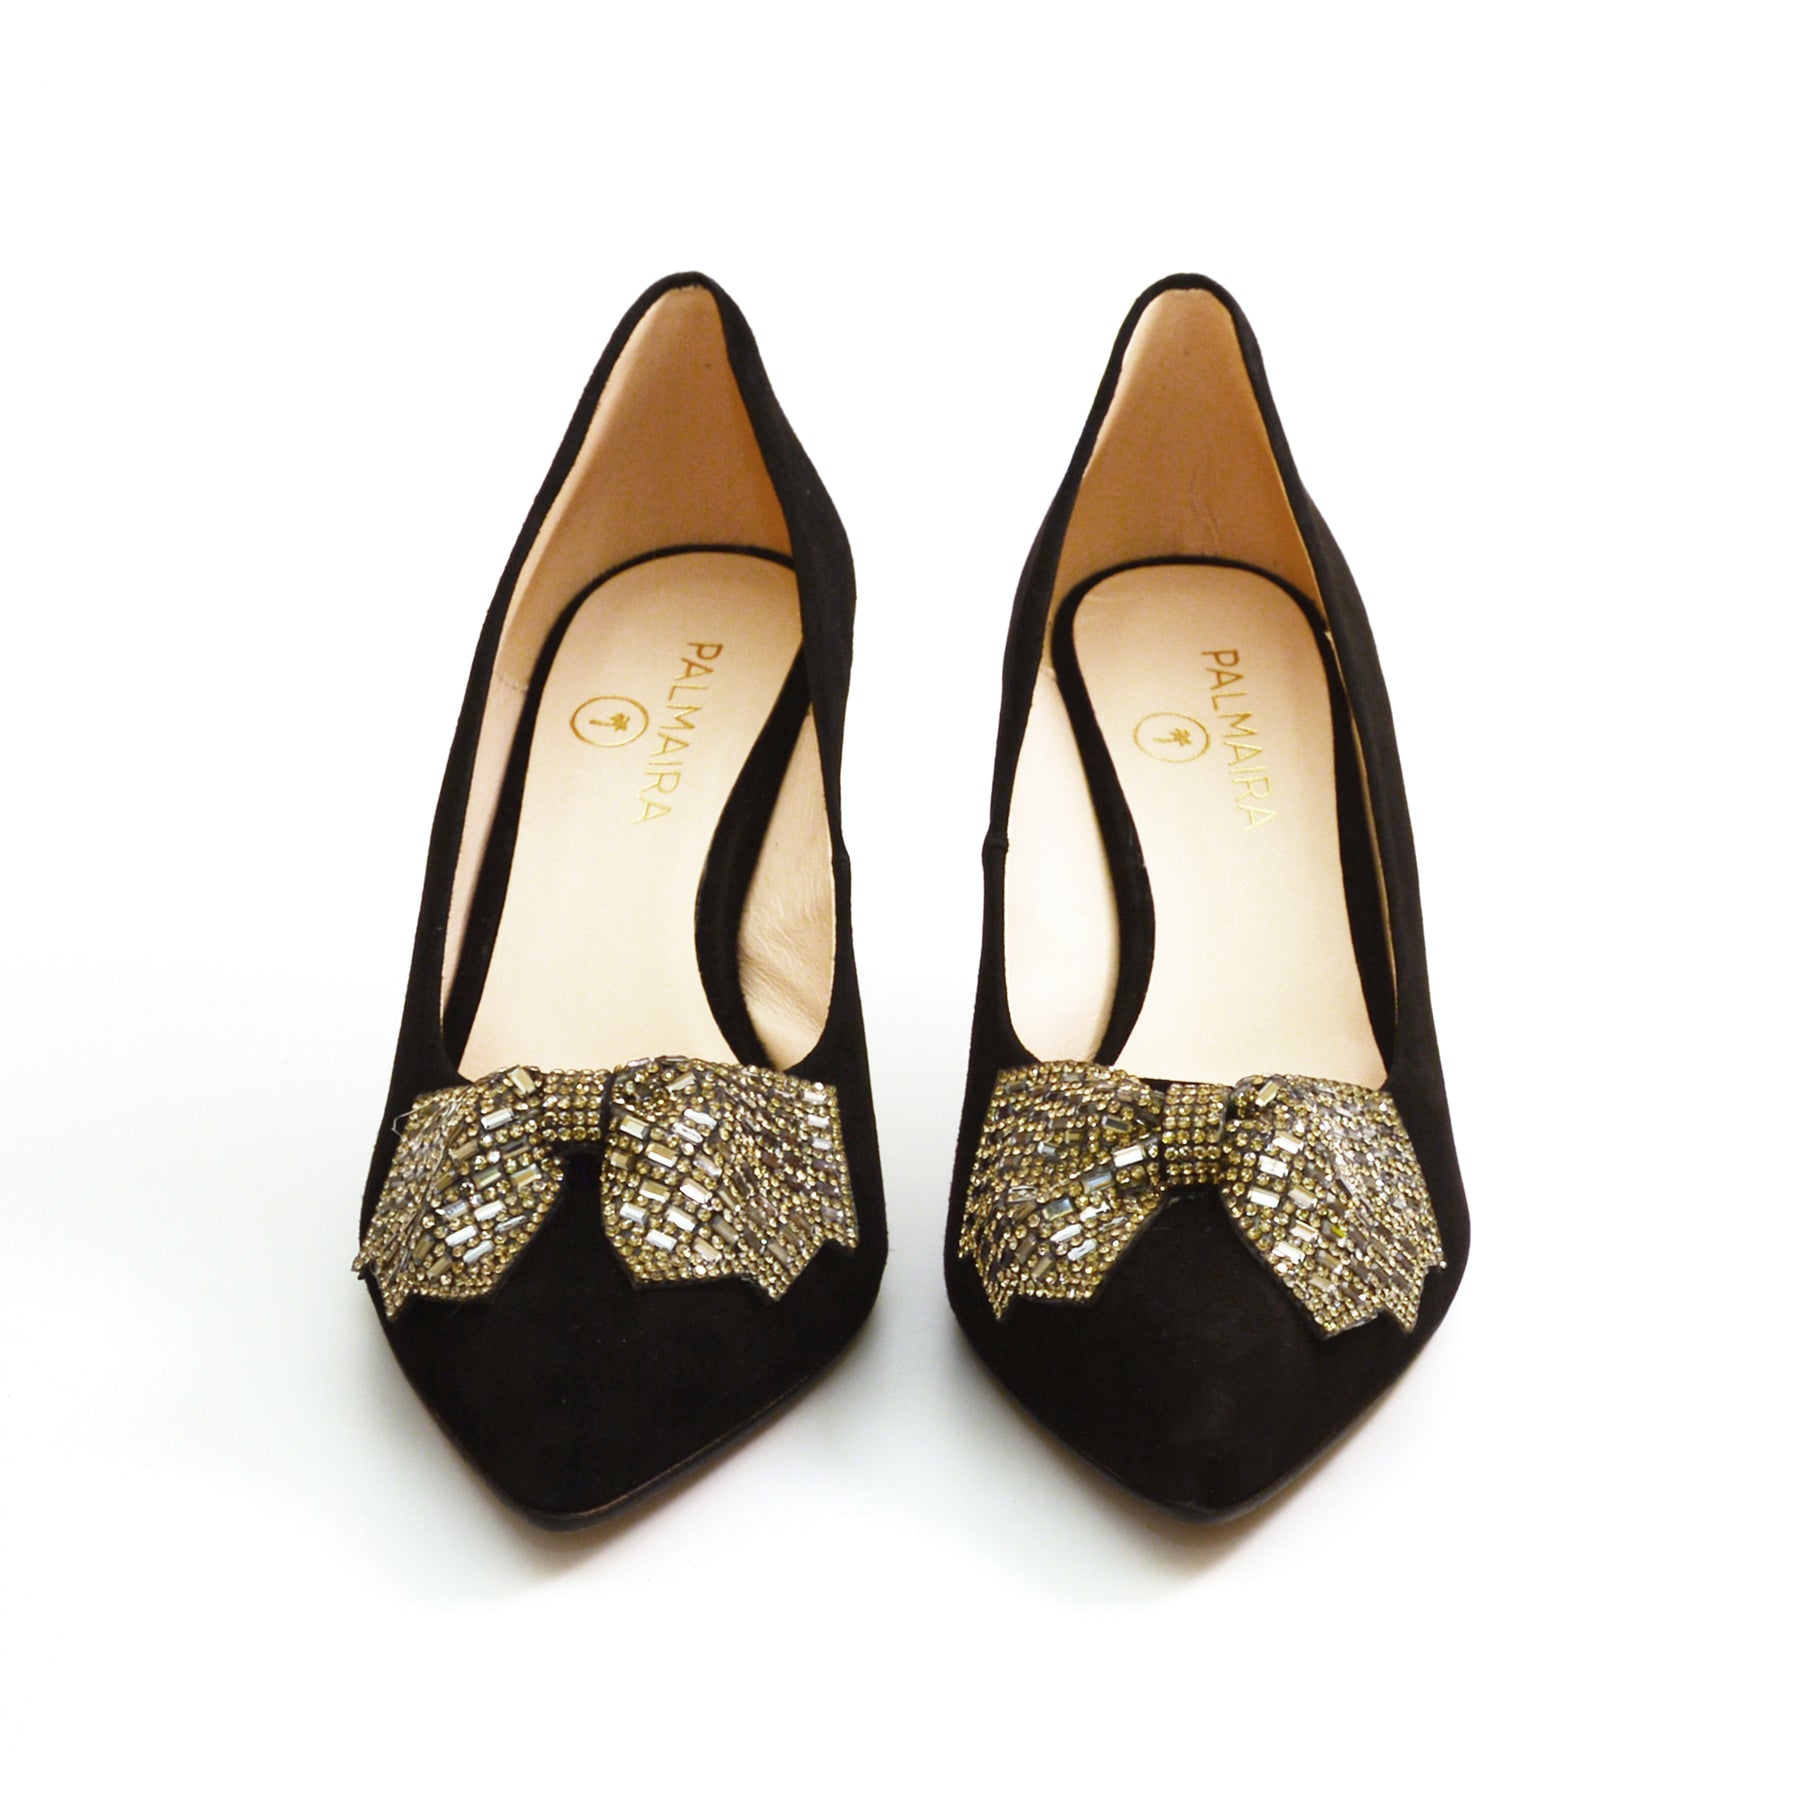 SAMPLE SALE Felicity heels